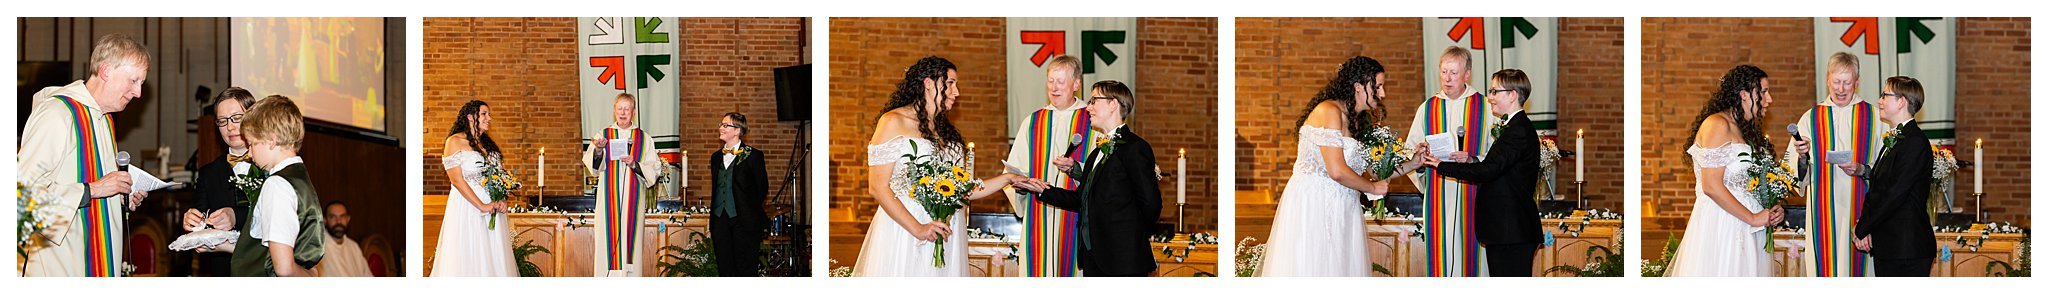 Angela Sabz Queer Fall Wedding Montreal_0038.jpg